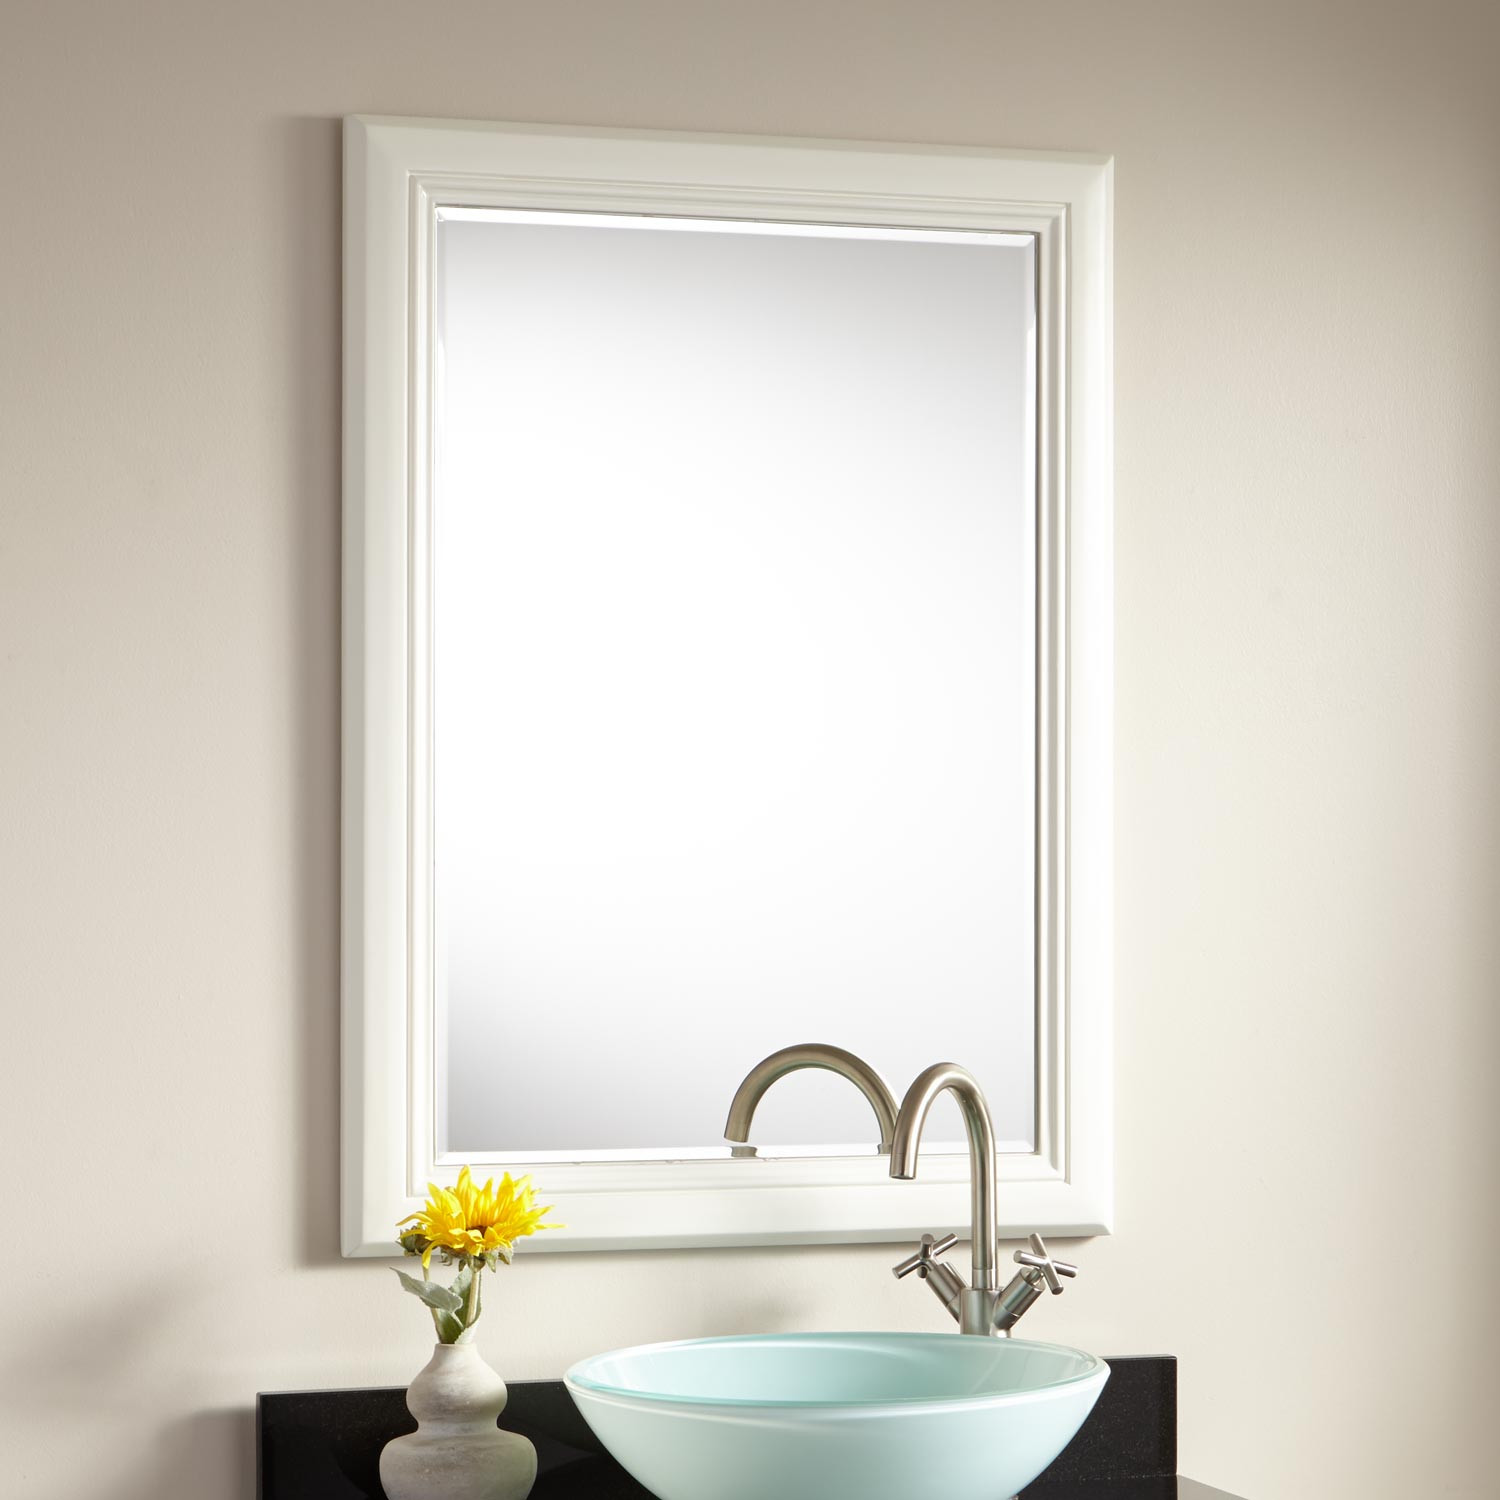 Bathroom Vanity With Mirror
 26" Chapman Vanity Mirror White Bathroom